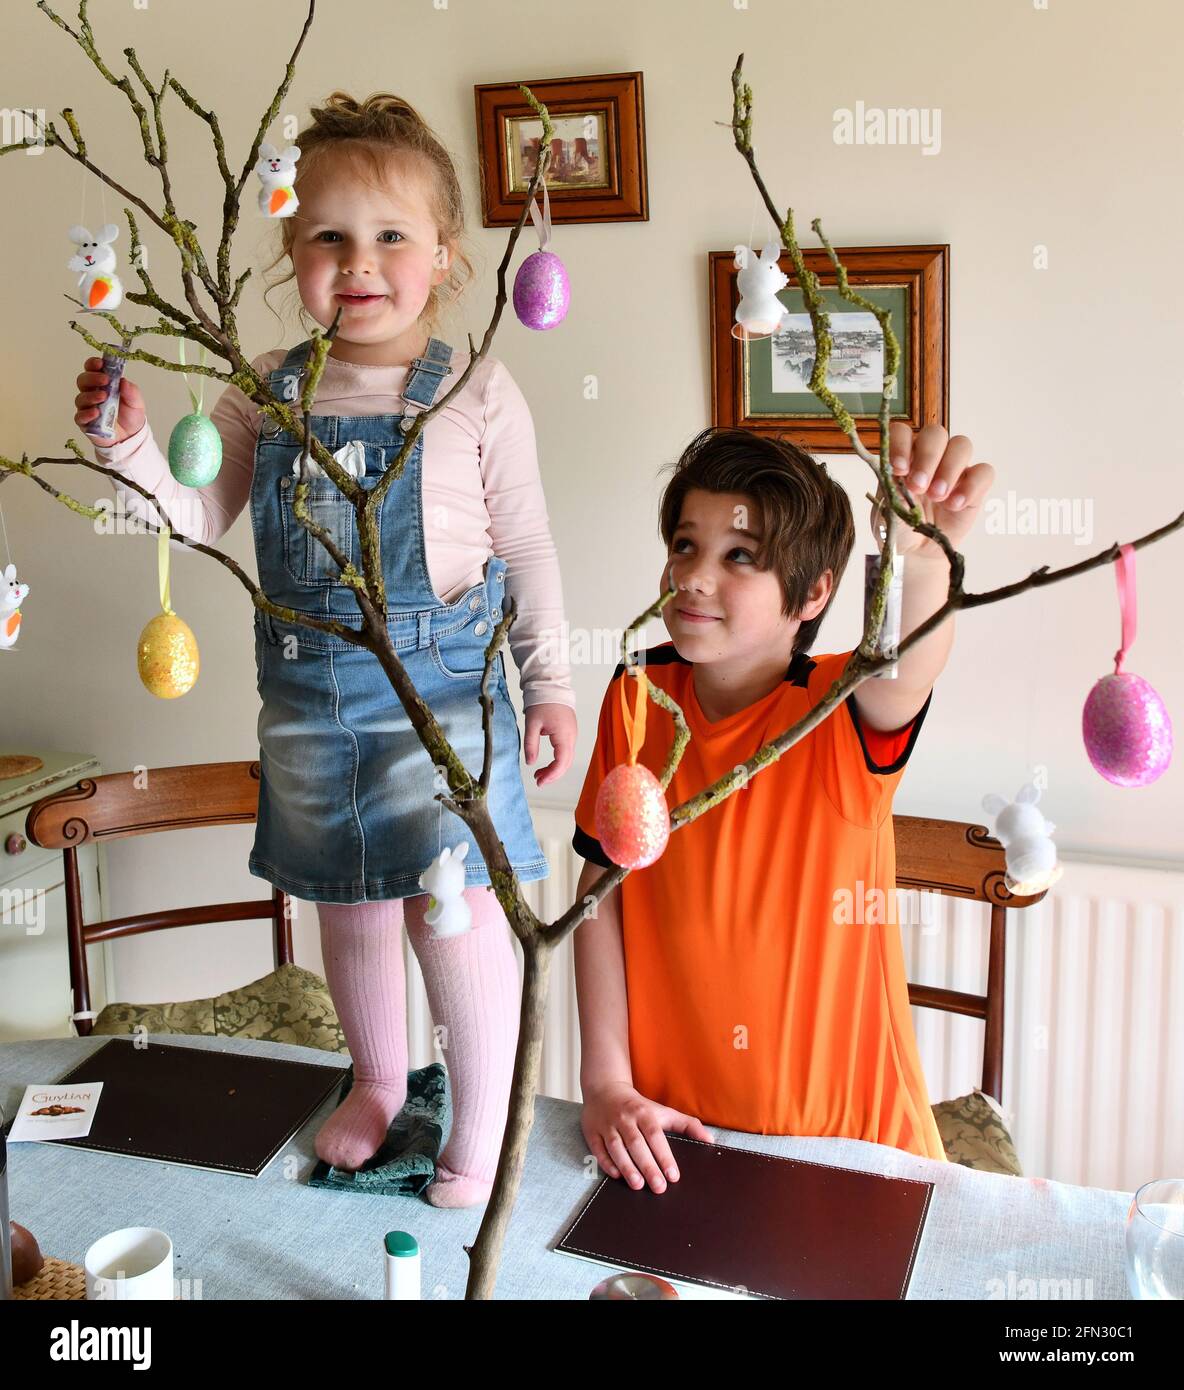 Family children celebrating Easter with egg tree Britain Uk. party fun easter egg hunt Stock Photo